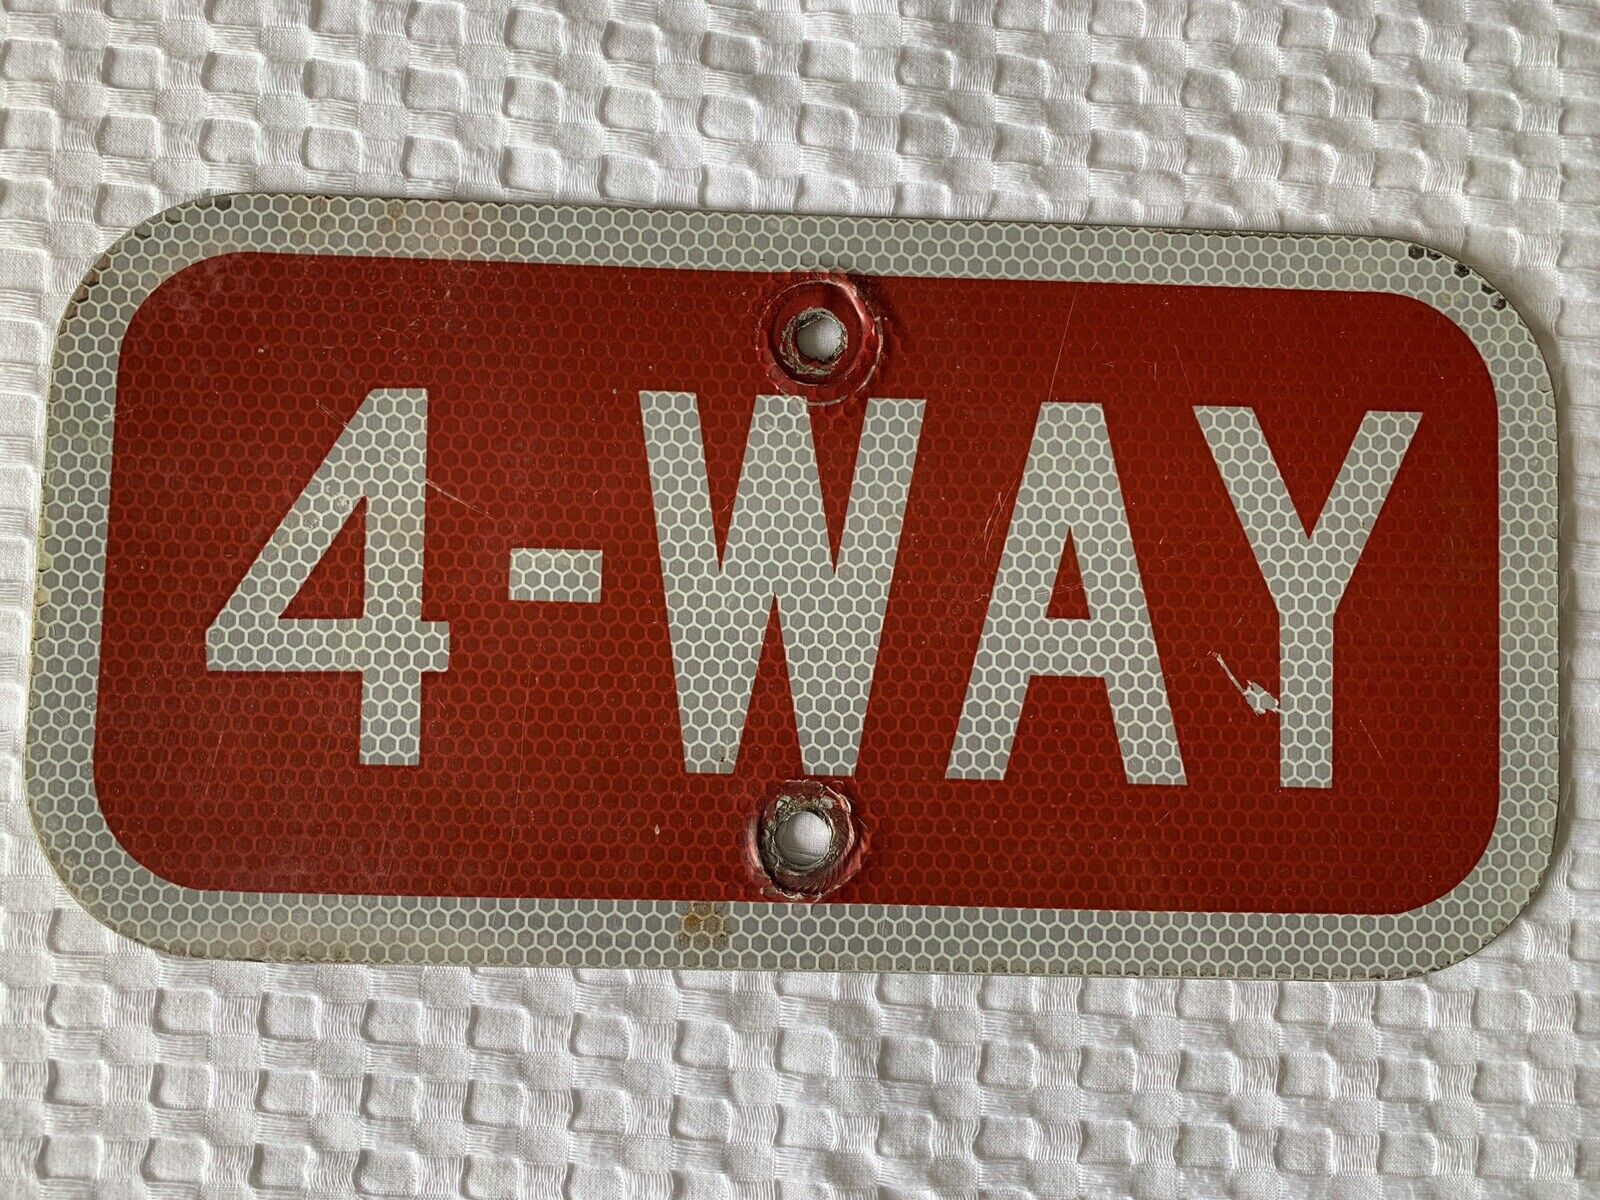 4 WAY Reflective Street Sign Vintage Original Red White Road Sign